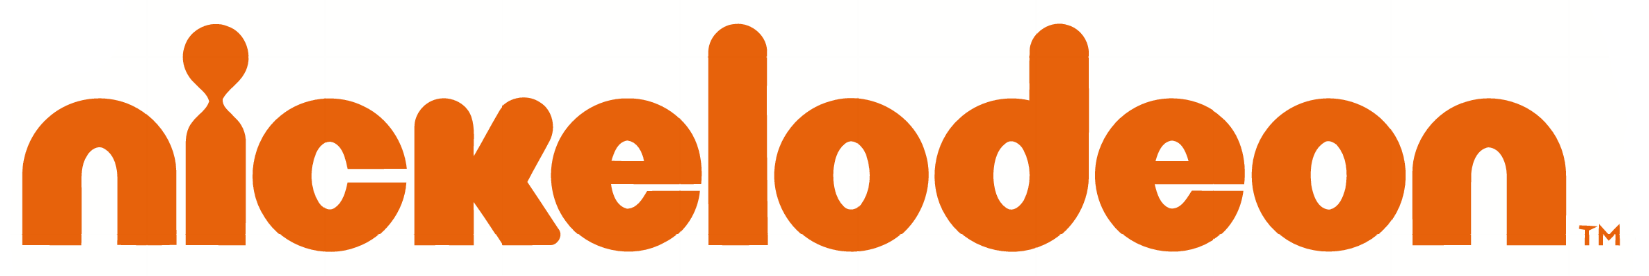 Nickelodeon_New_logo.png